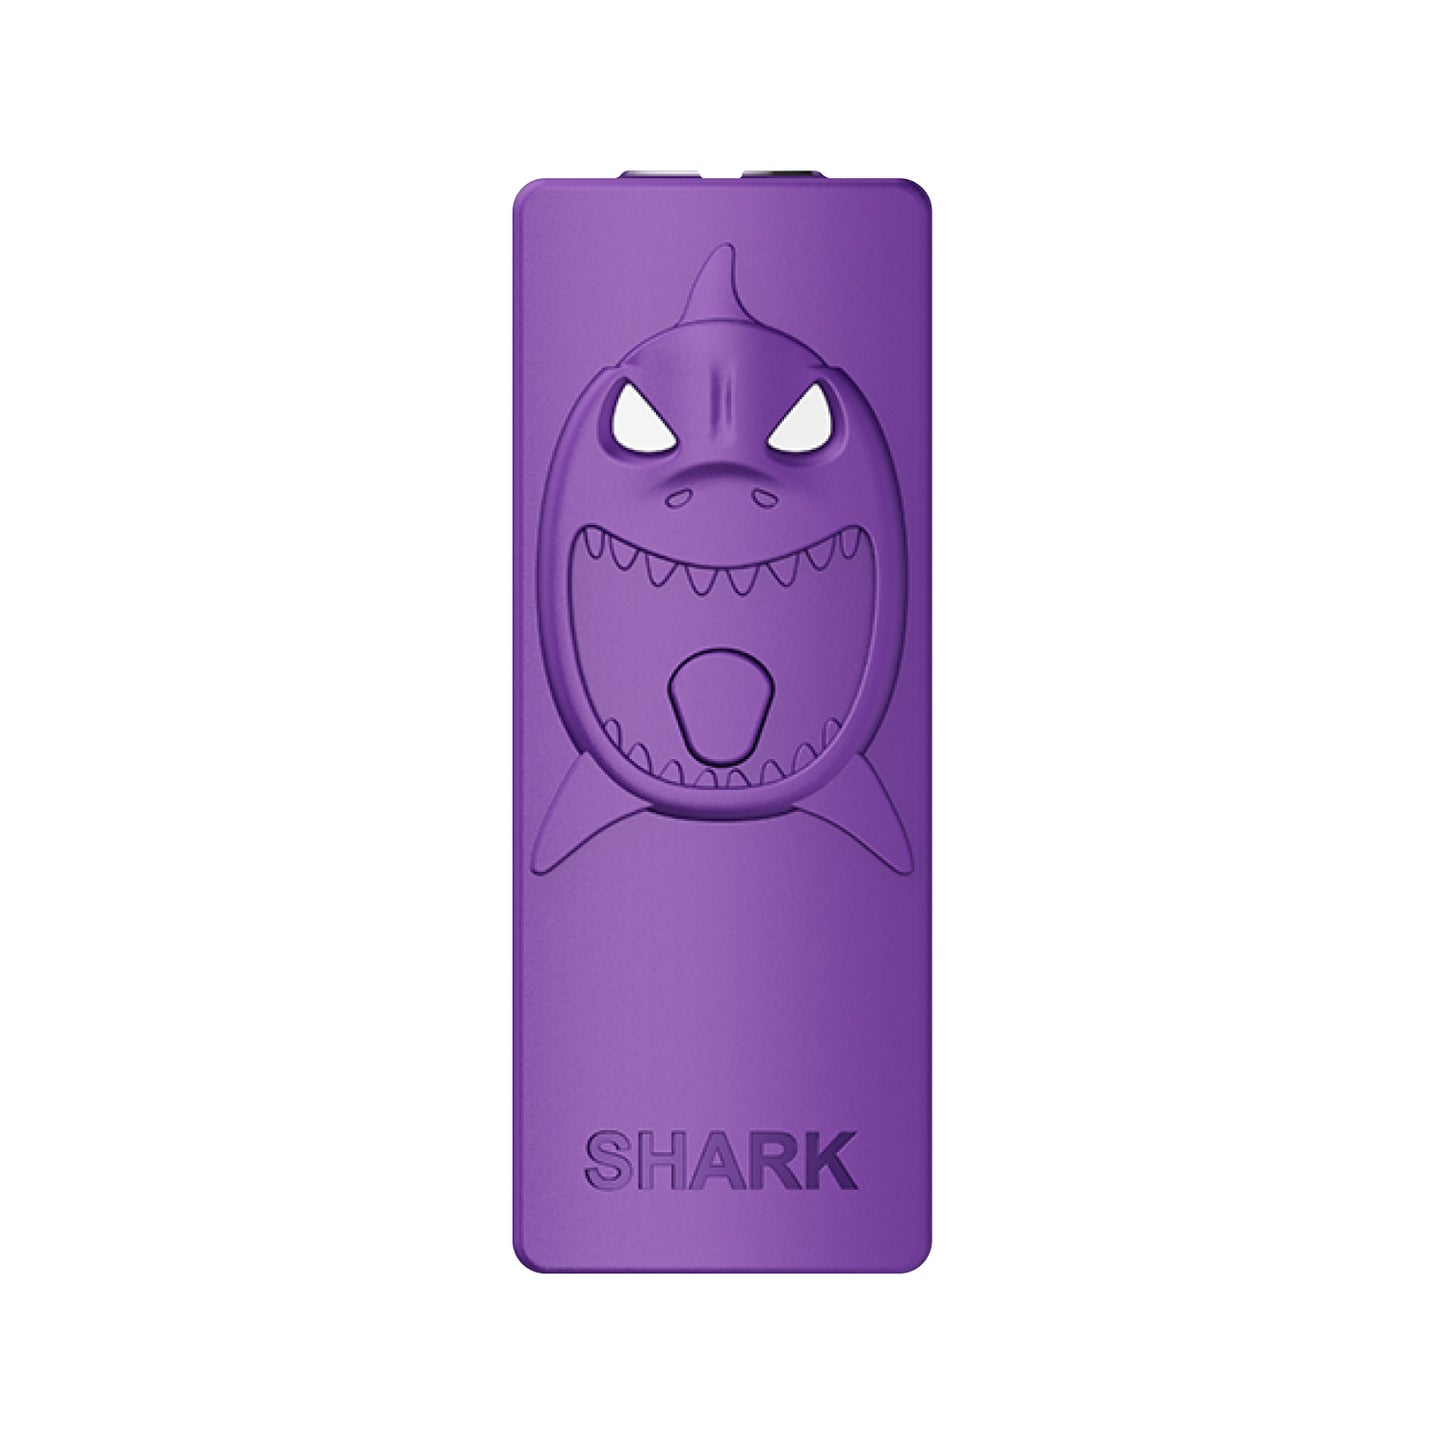 Yocan Kodo Animal Box Mod - shark - purple